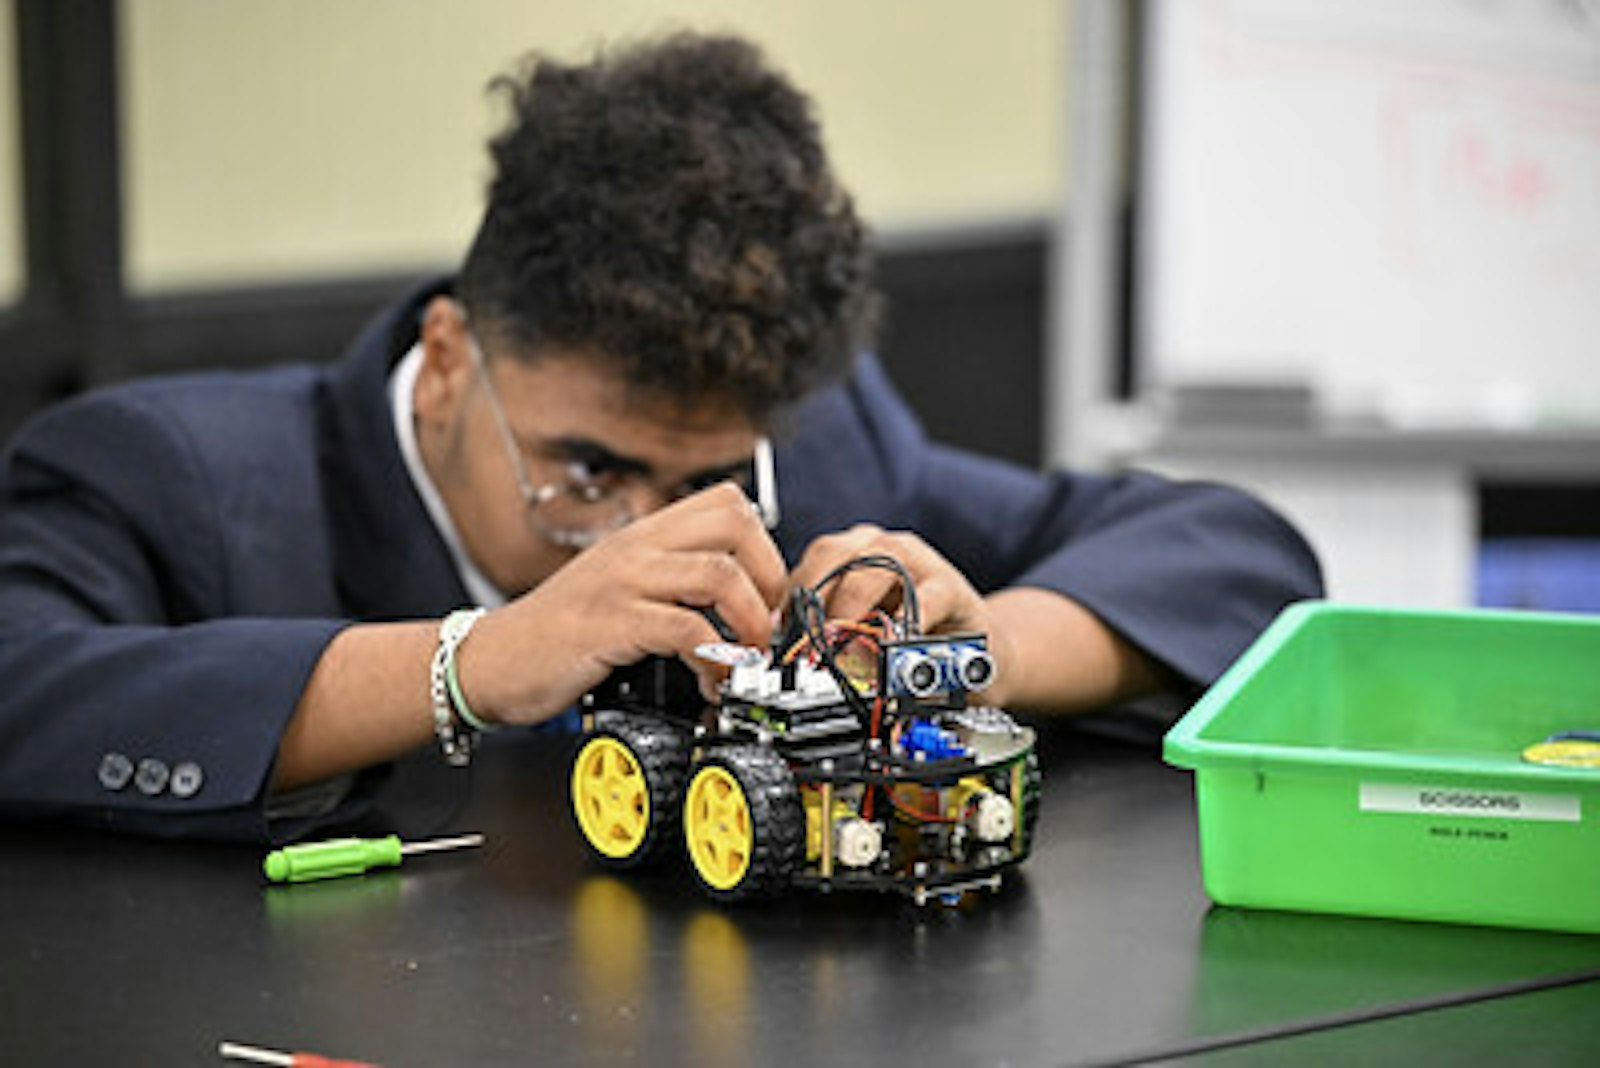 Freshman Jack P. makes adjustments to his robot during an Intro to Robotics course.